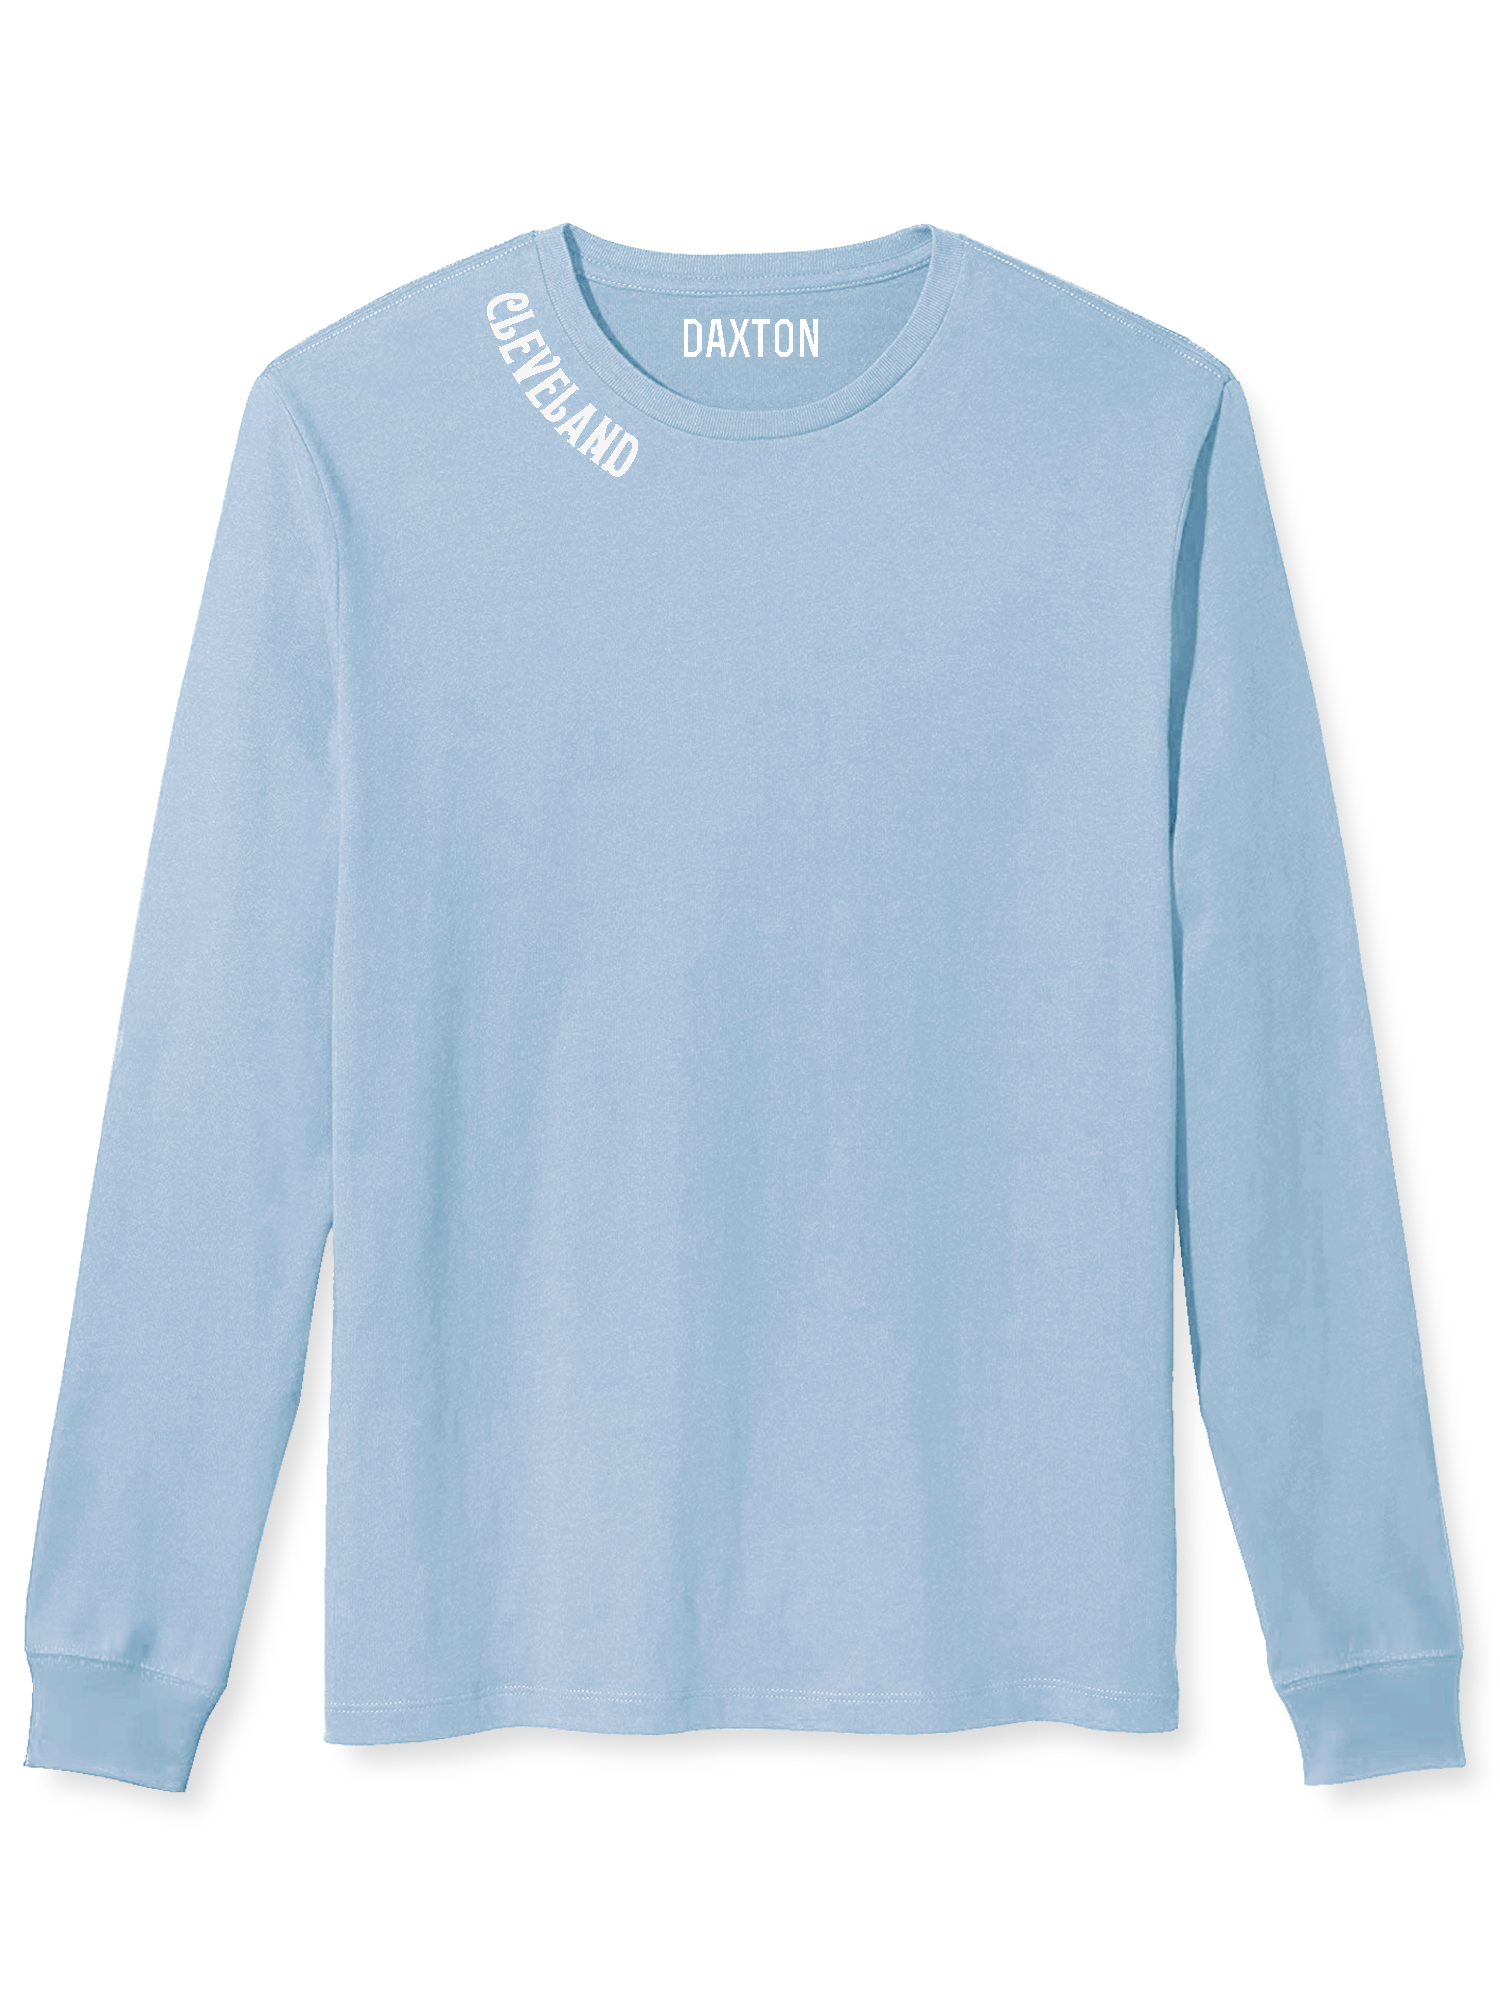 Daxton Premium Cleveland Men Long Sleeves T Shirt Ultra Soft Medium Weight Cotton, Light Blue Tee White Letters Medium - image 2 of 3